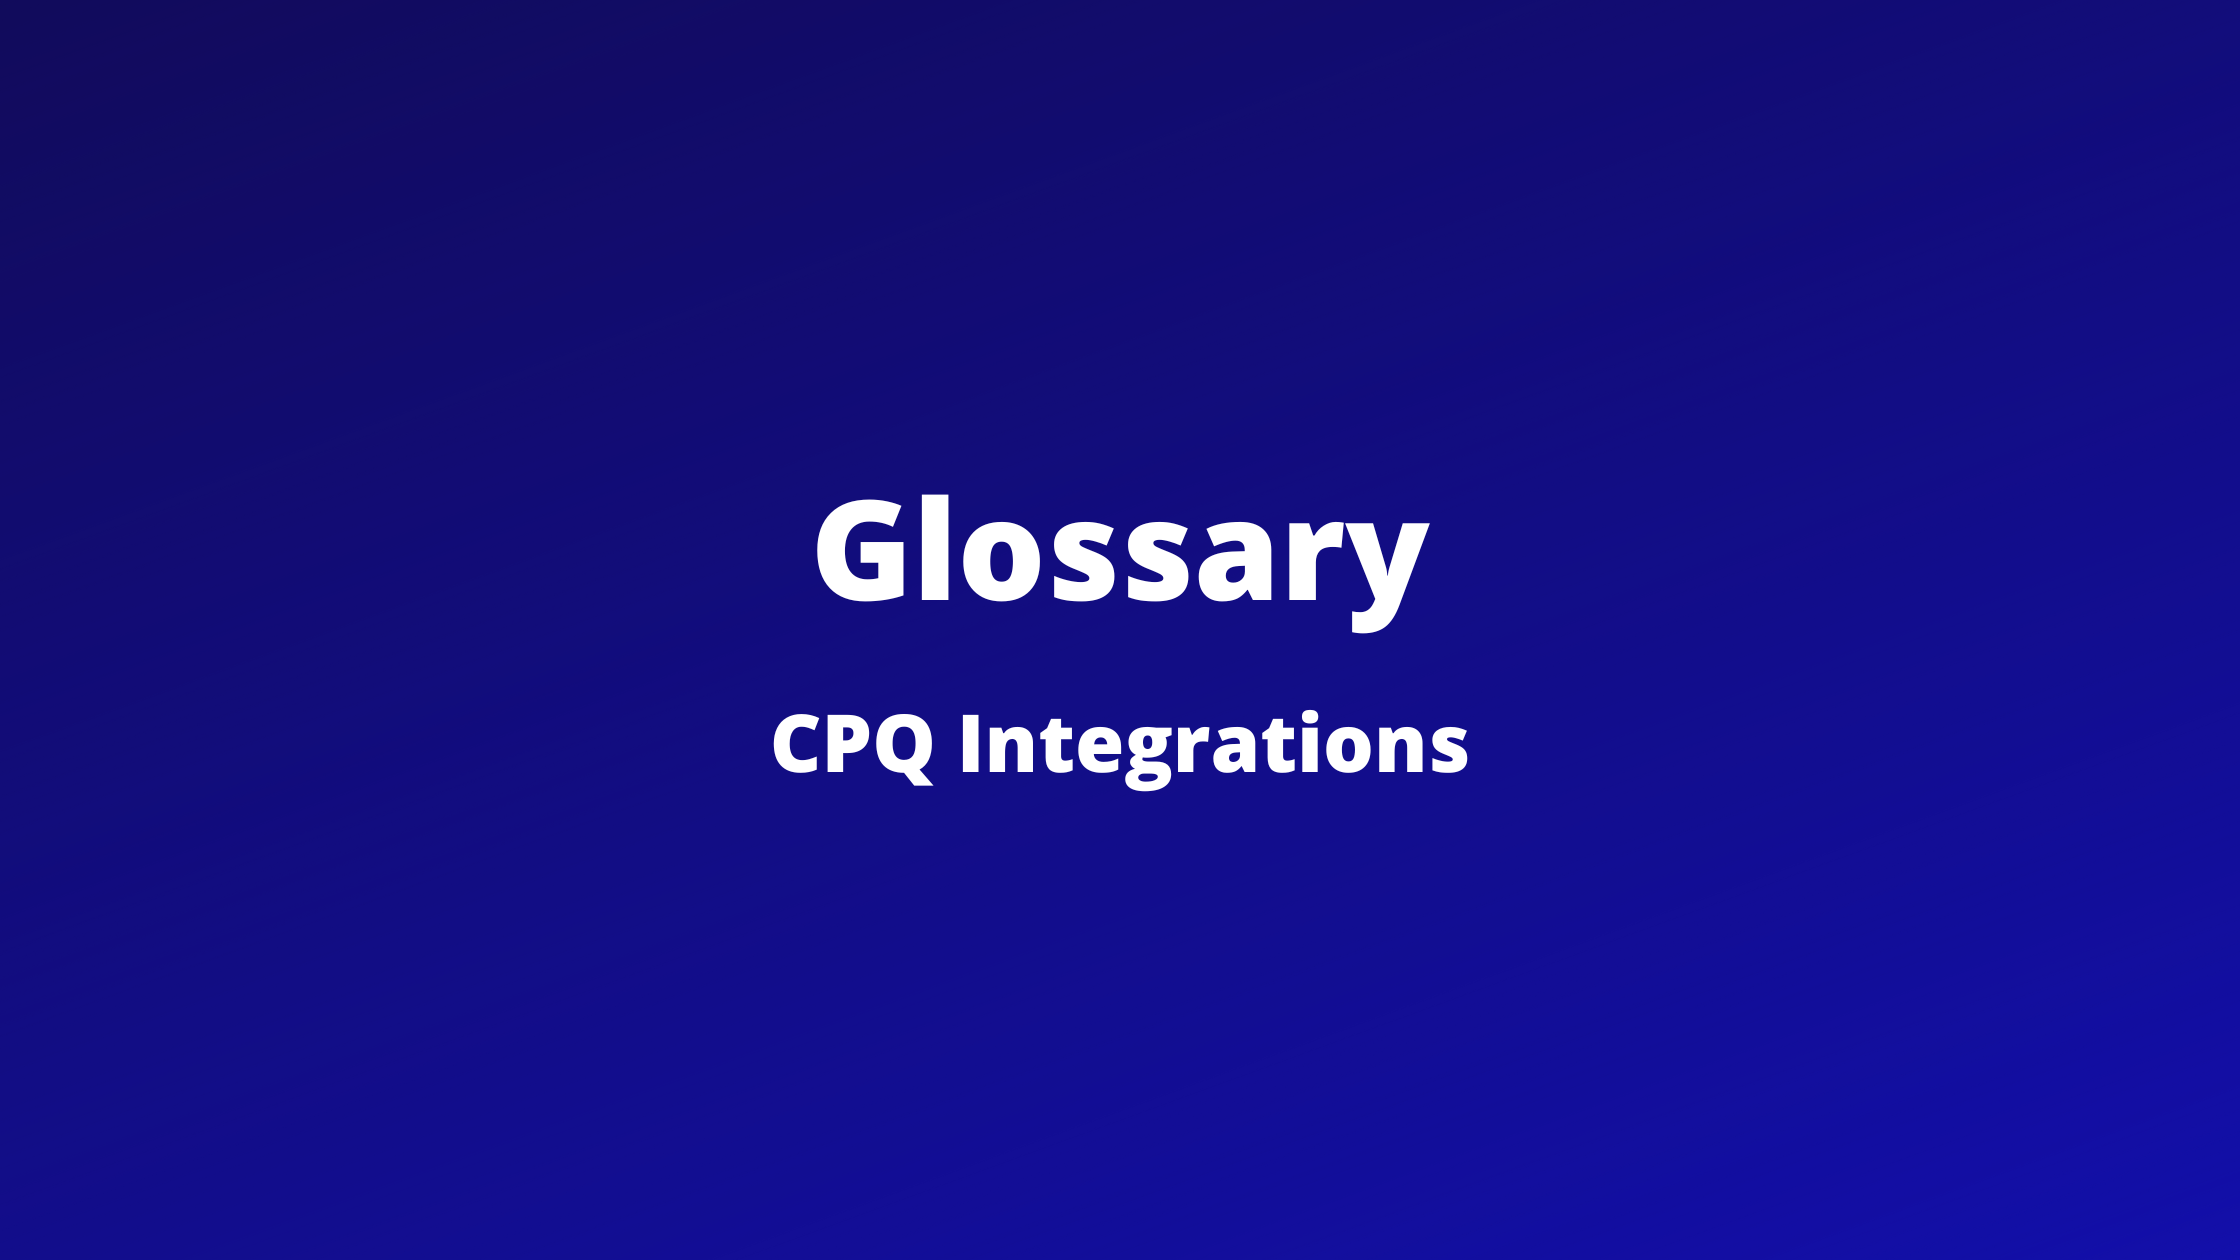 CPQ Integrations